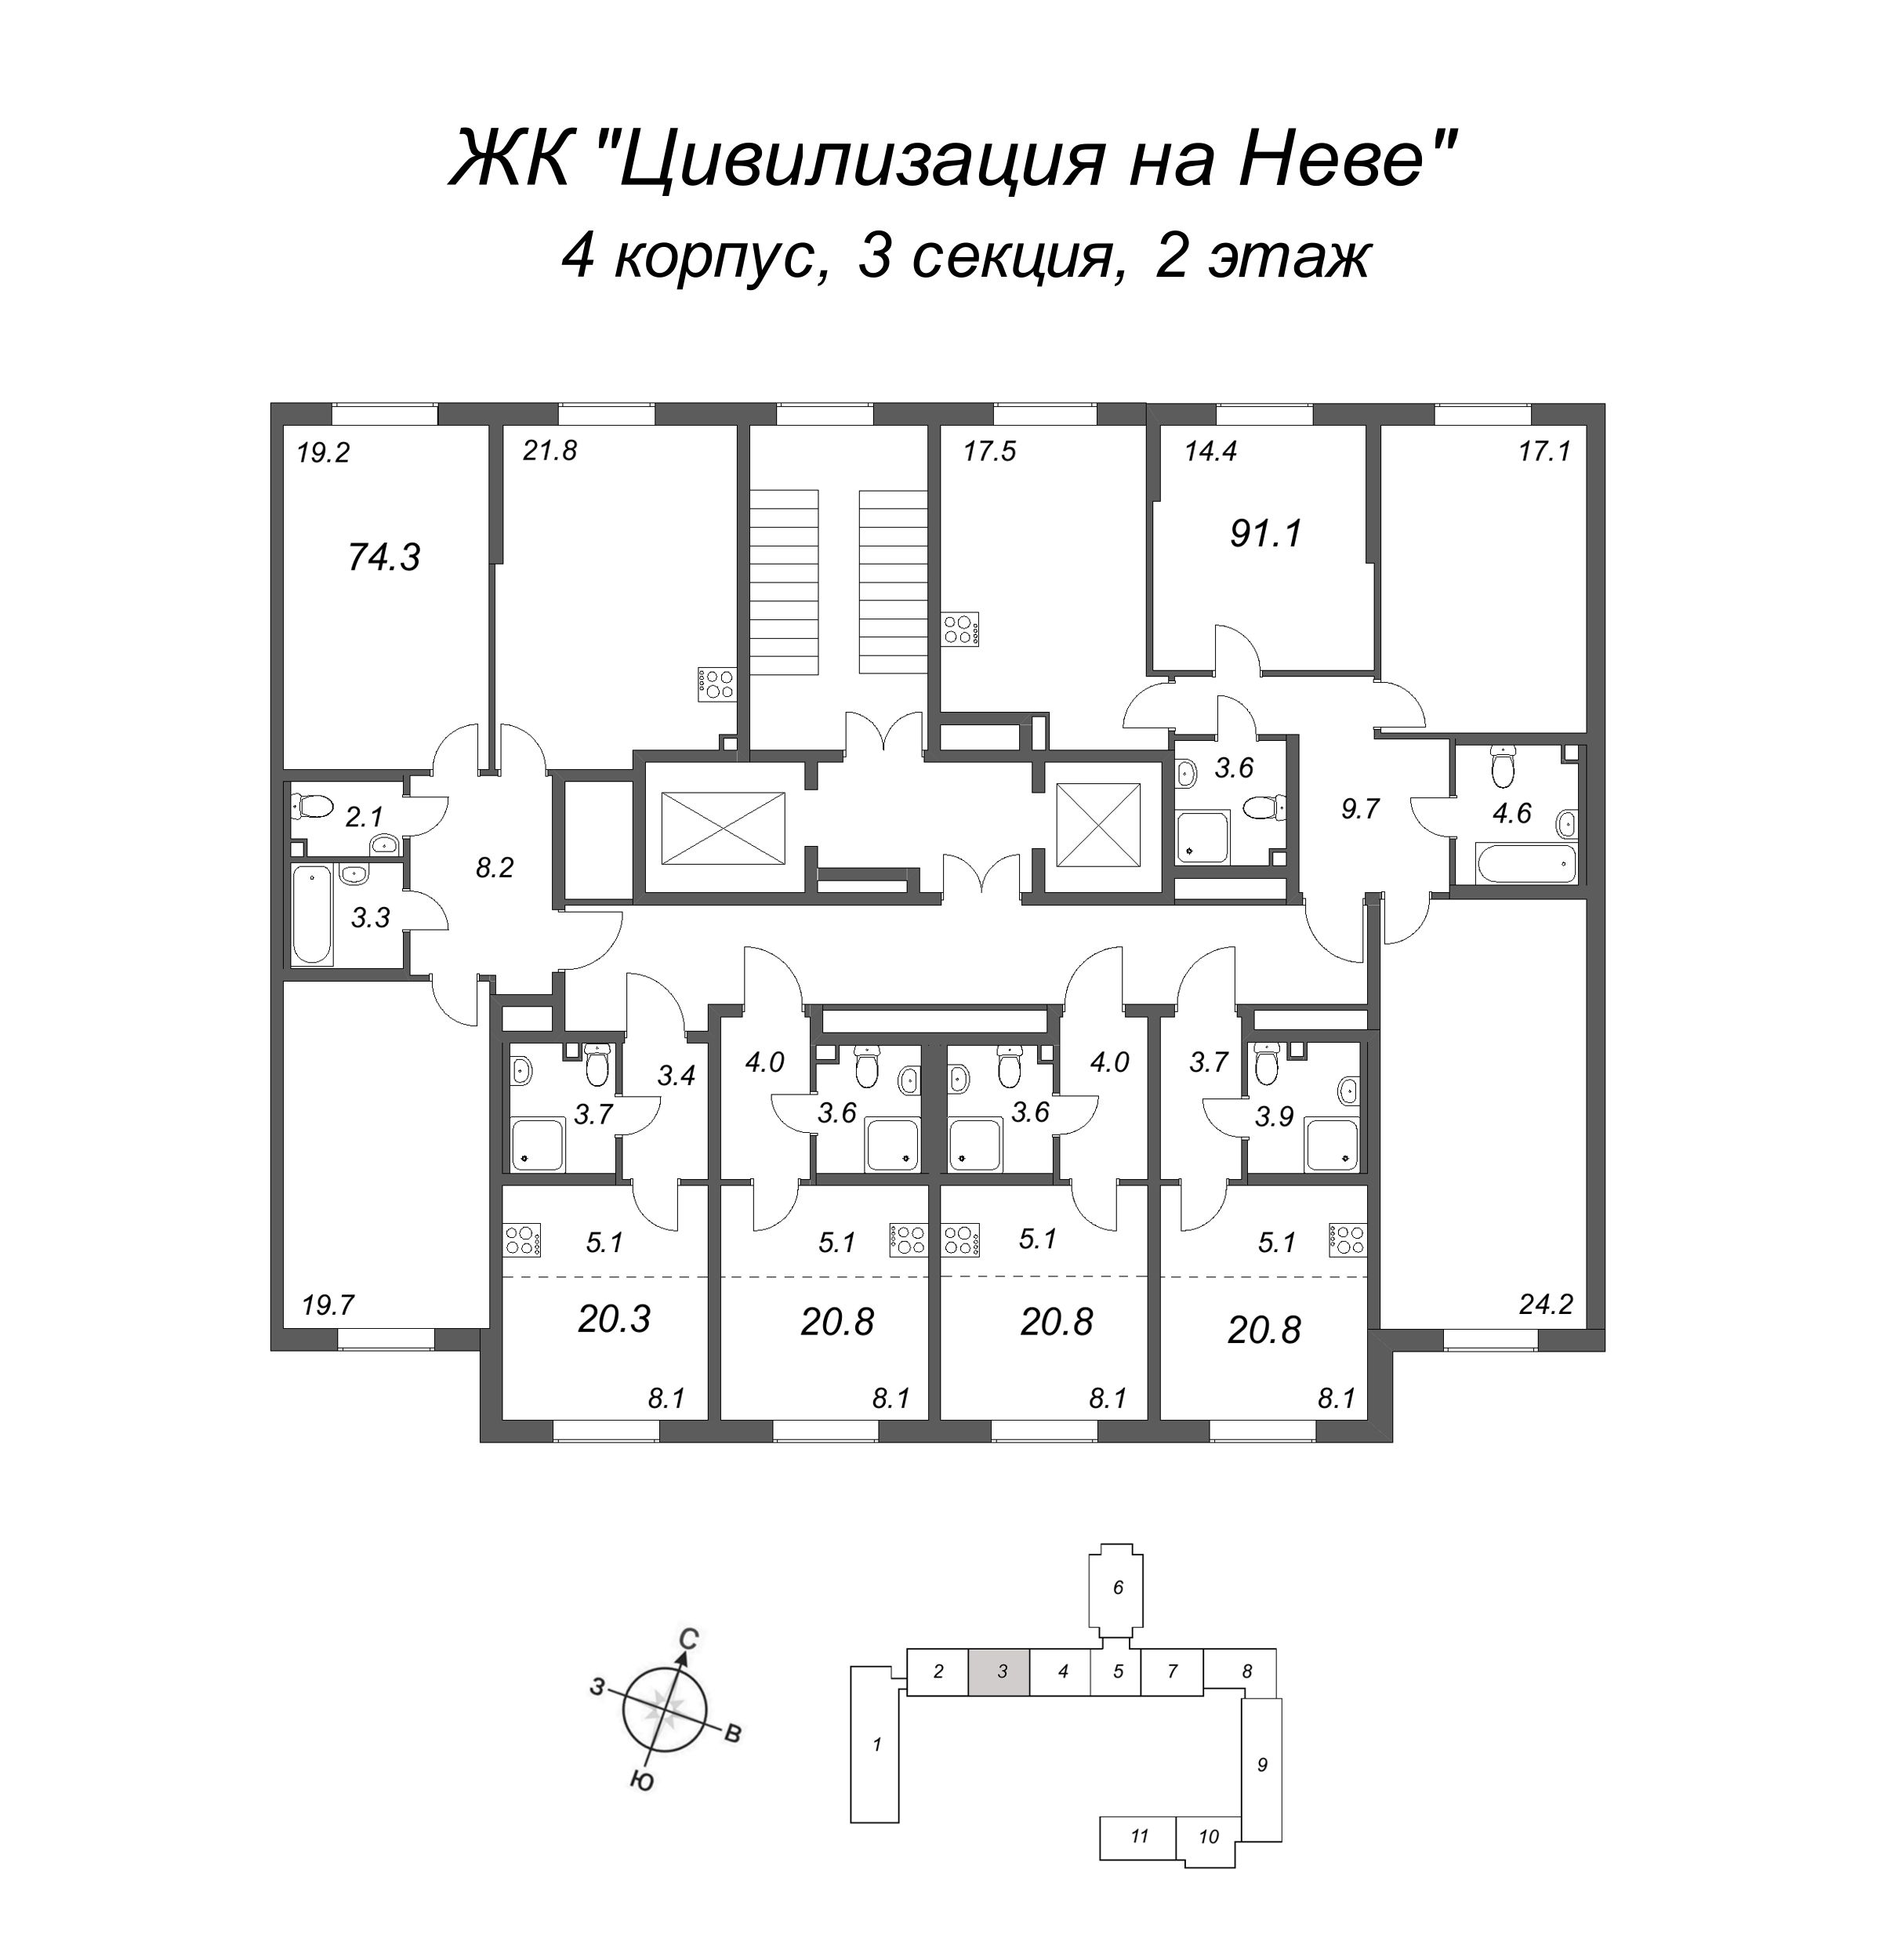 4-комнатная (Евро) квартира, 91.1 м² - планировка этажа